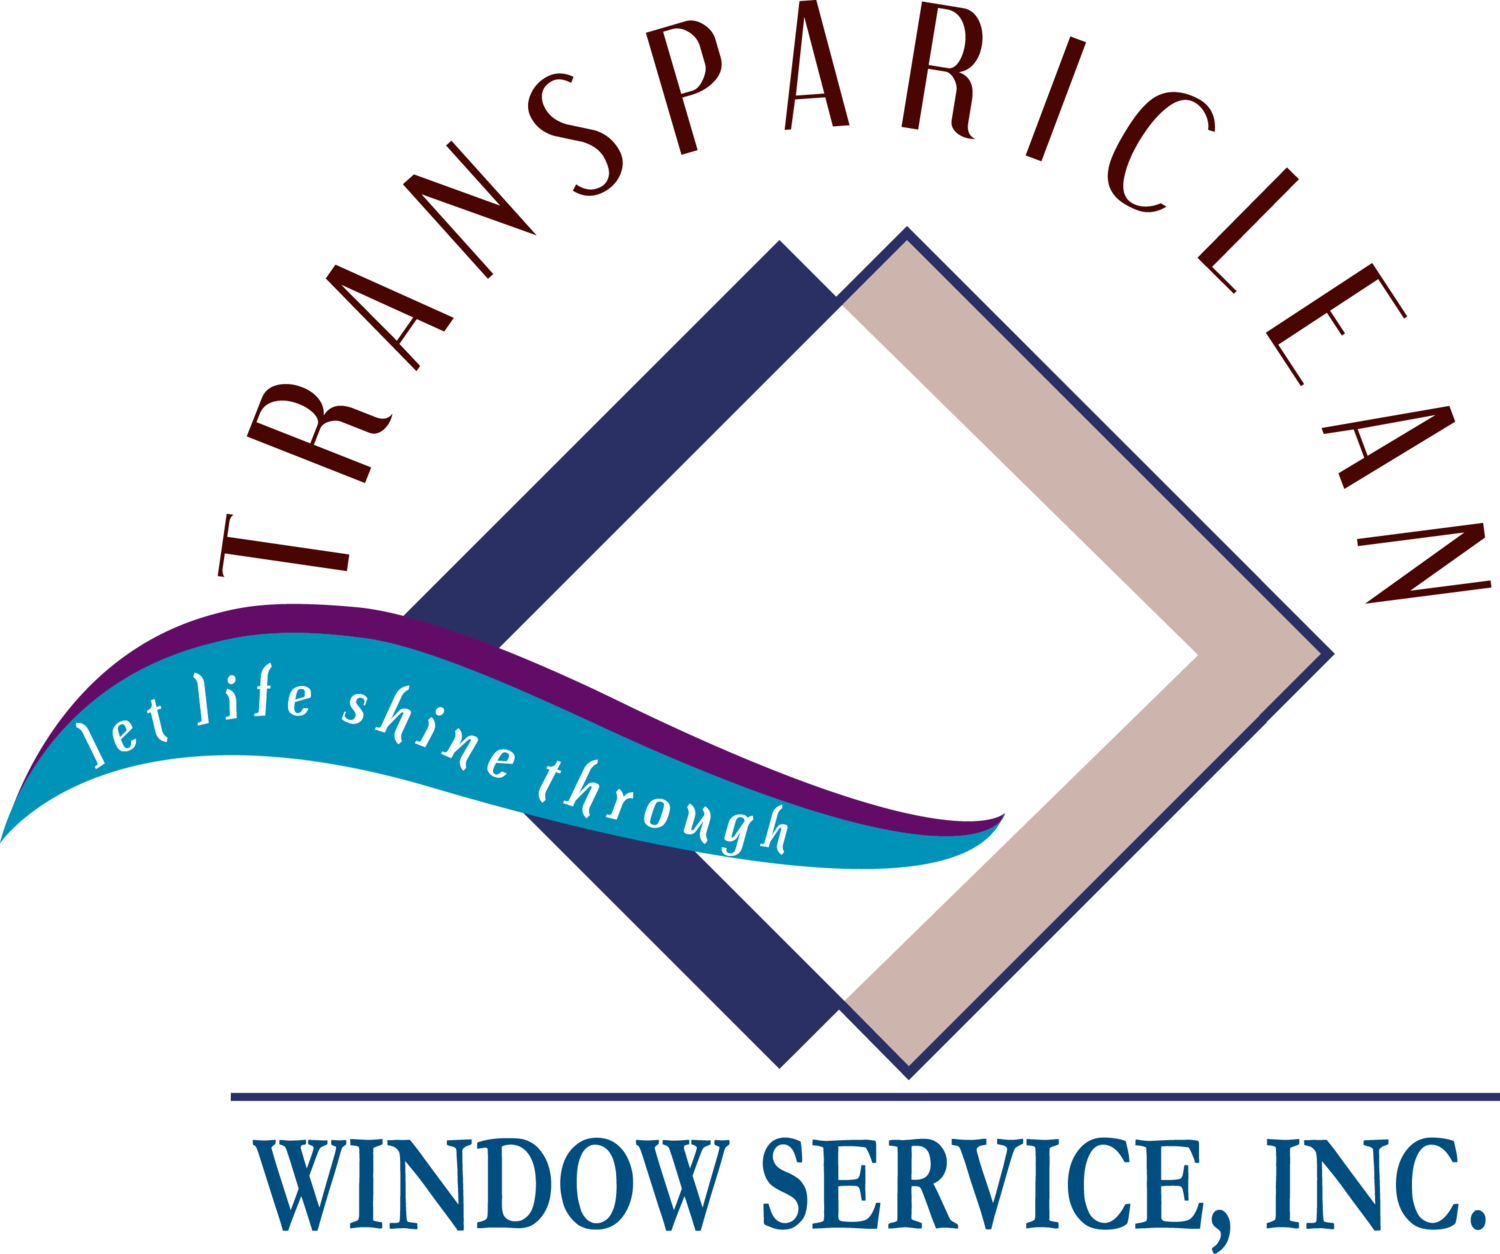 Transpariclean Window Service Inc.